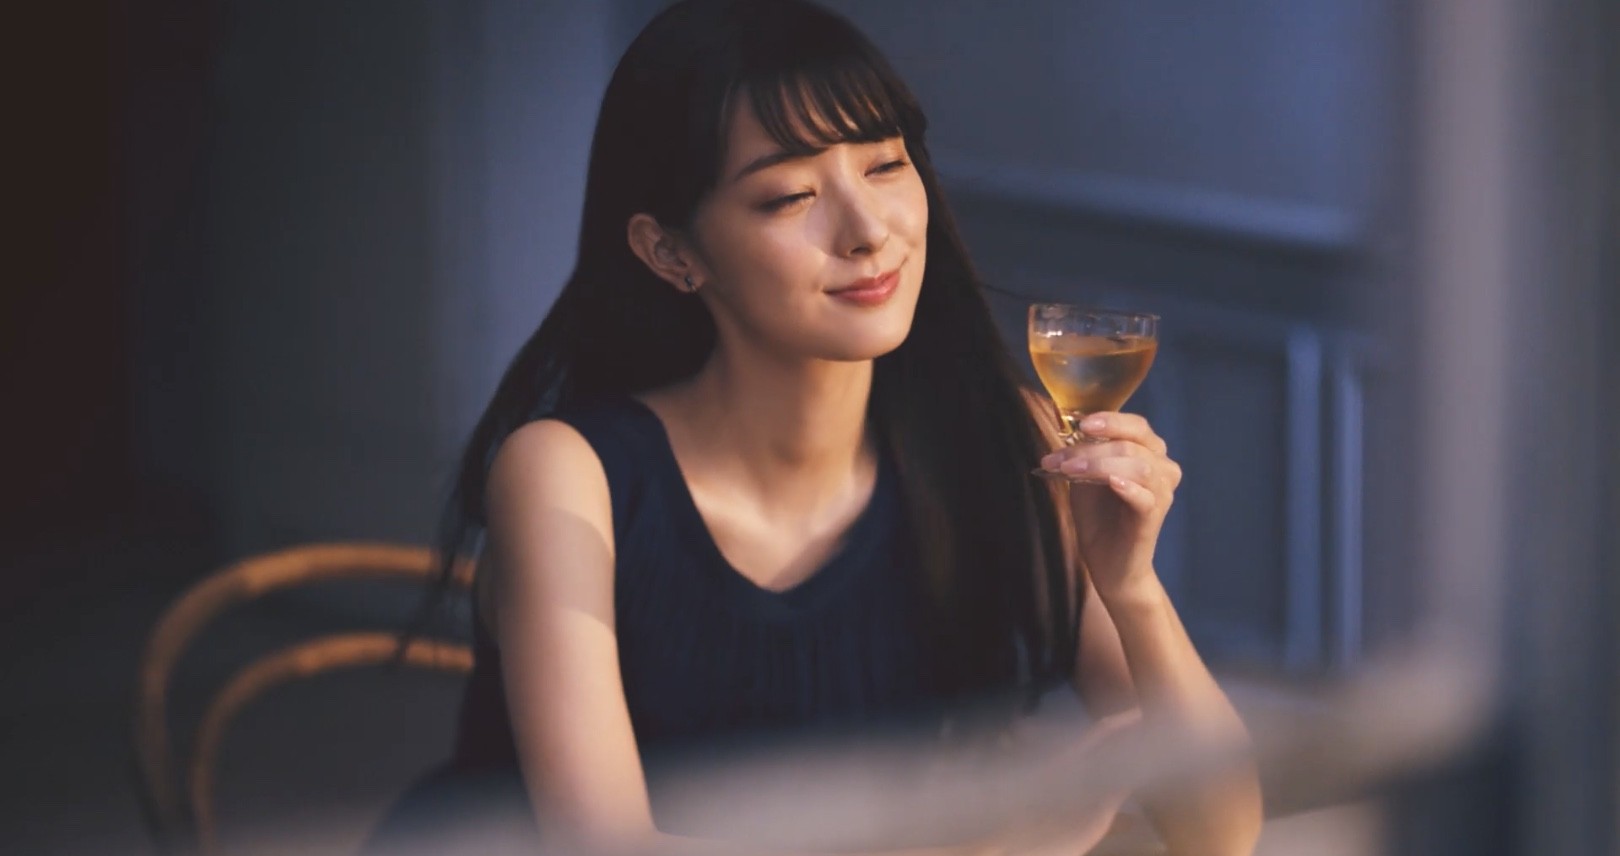 The Choya新cmに出演する女性は宮本茉由 静かに梅酒を楽しむ様子が描かれる